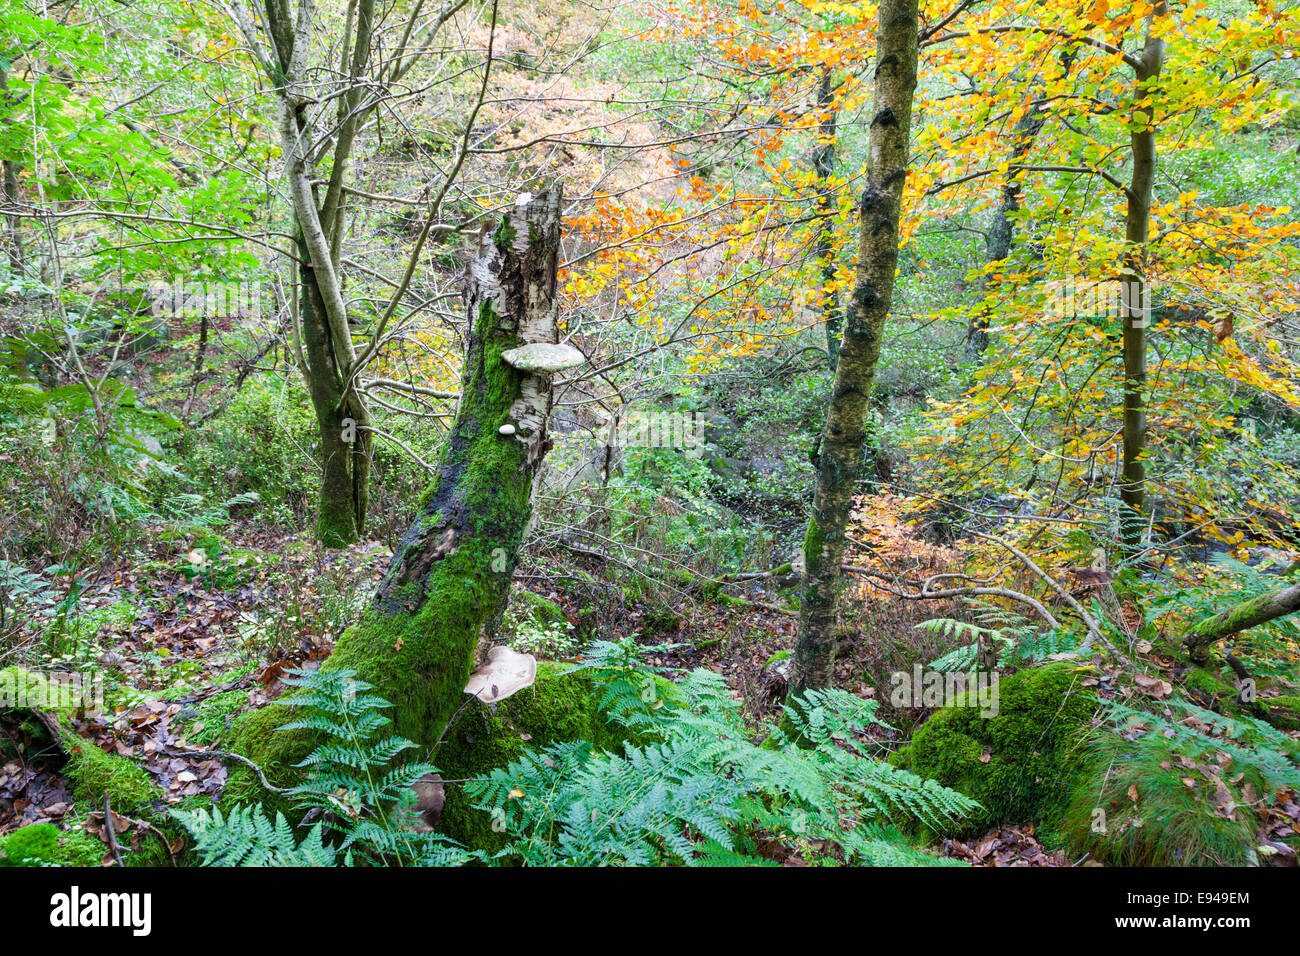 Dense woodland with birch trees, bracket fungi, ferns and moss in Autumn. Padley Gorge, Derbyshire, Peak District National Park, England, UK. Stock Photo